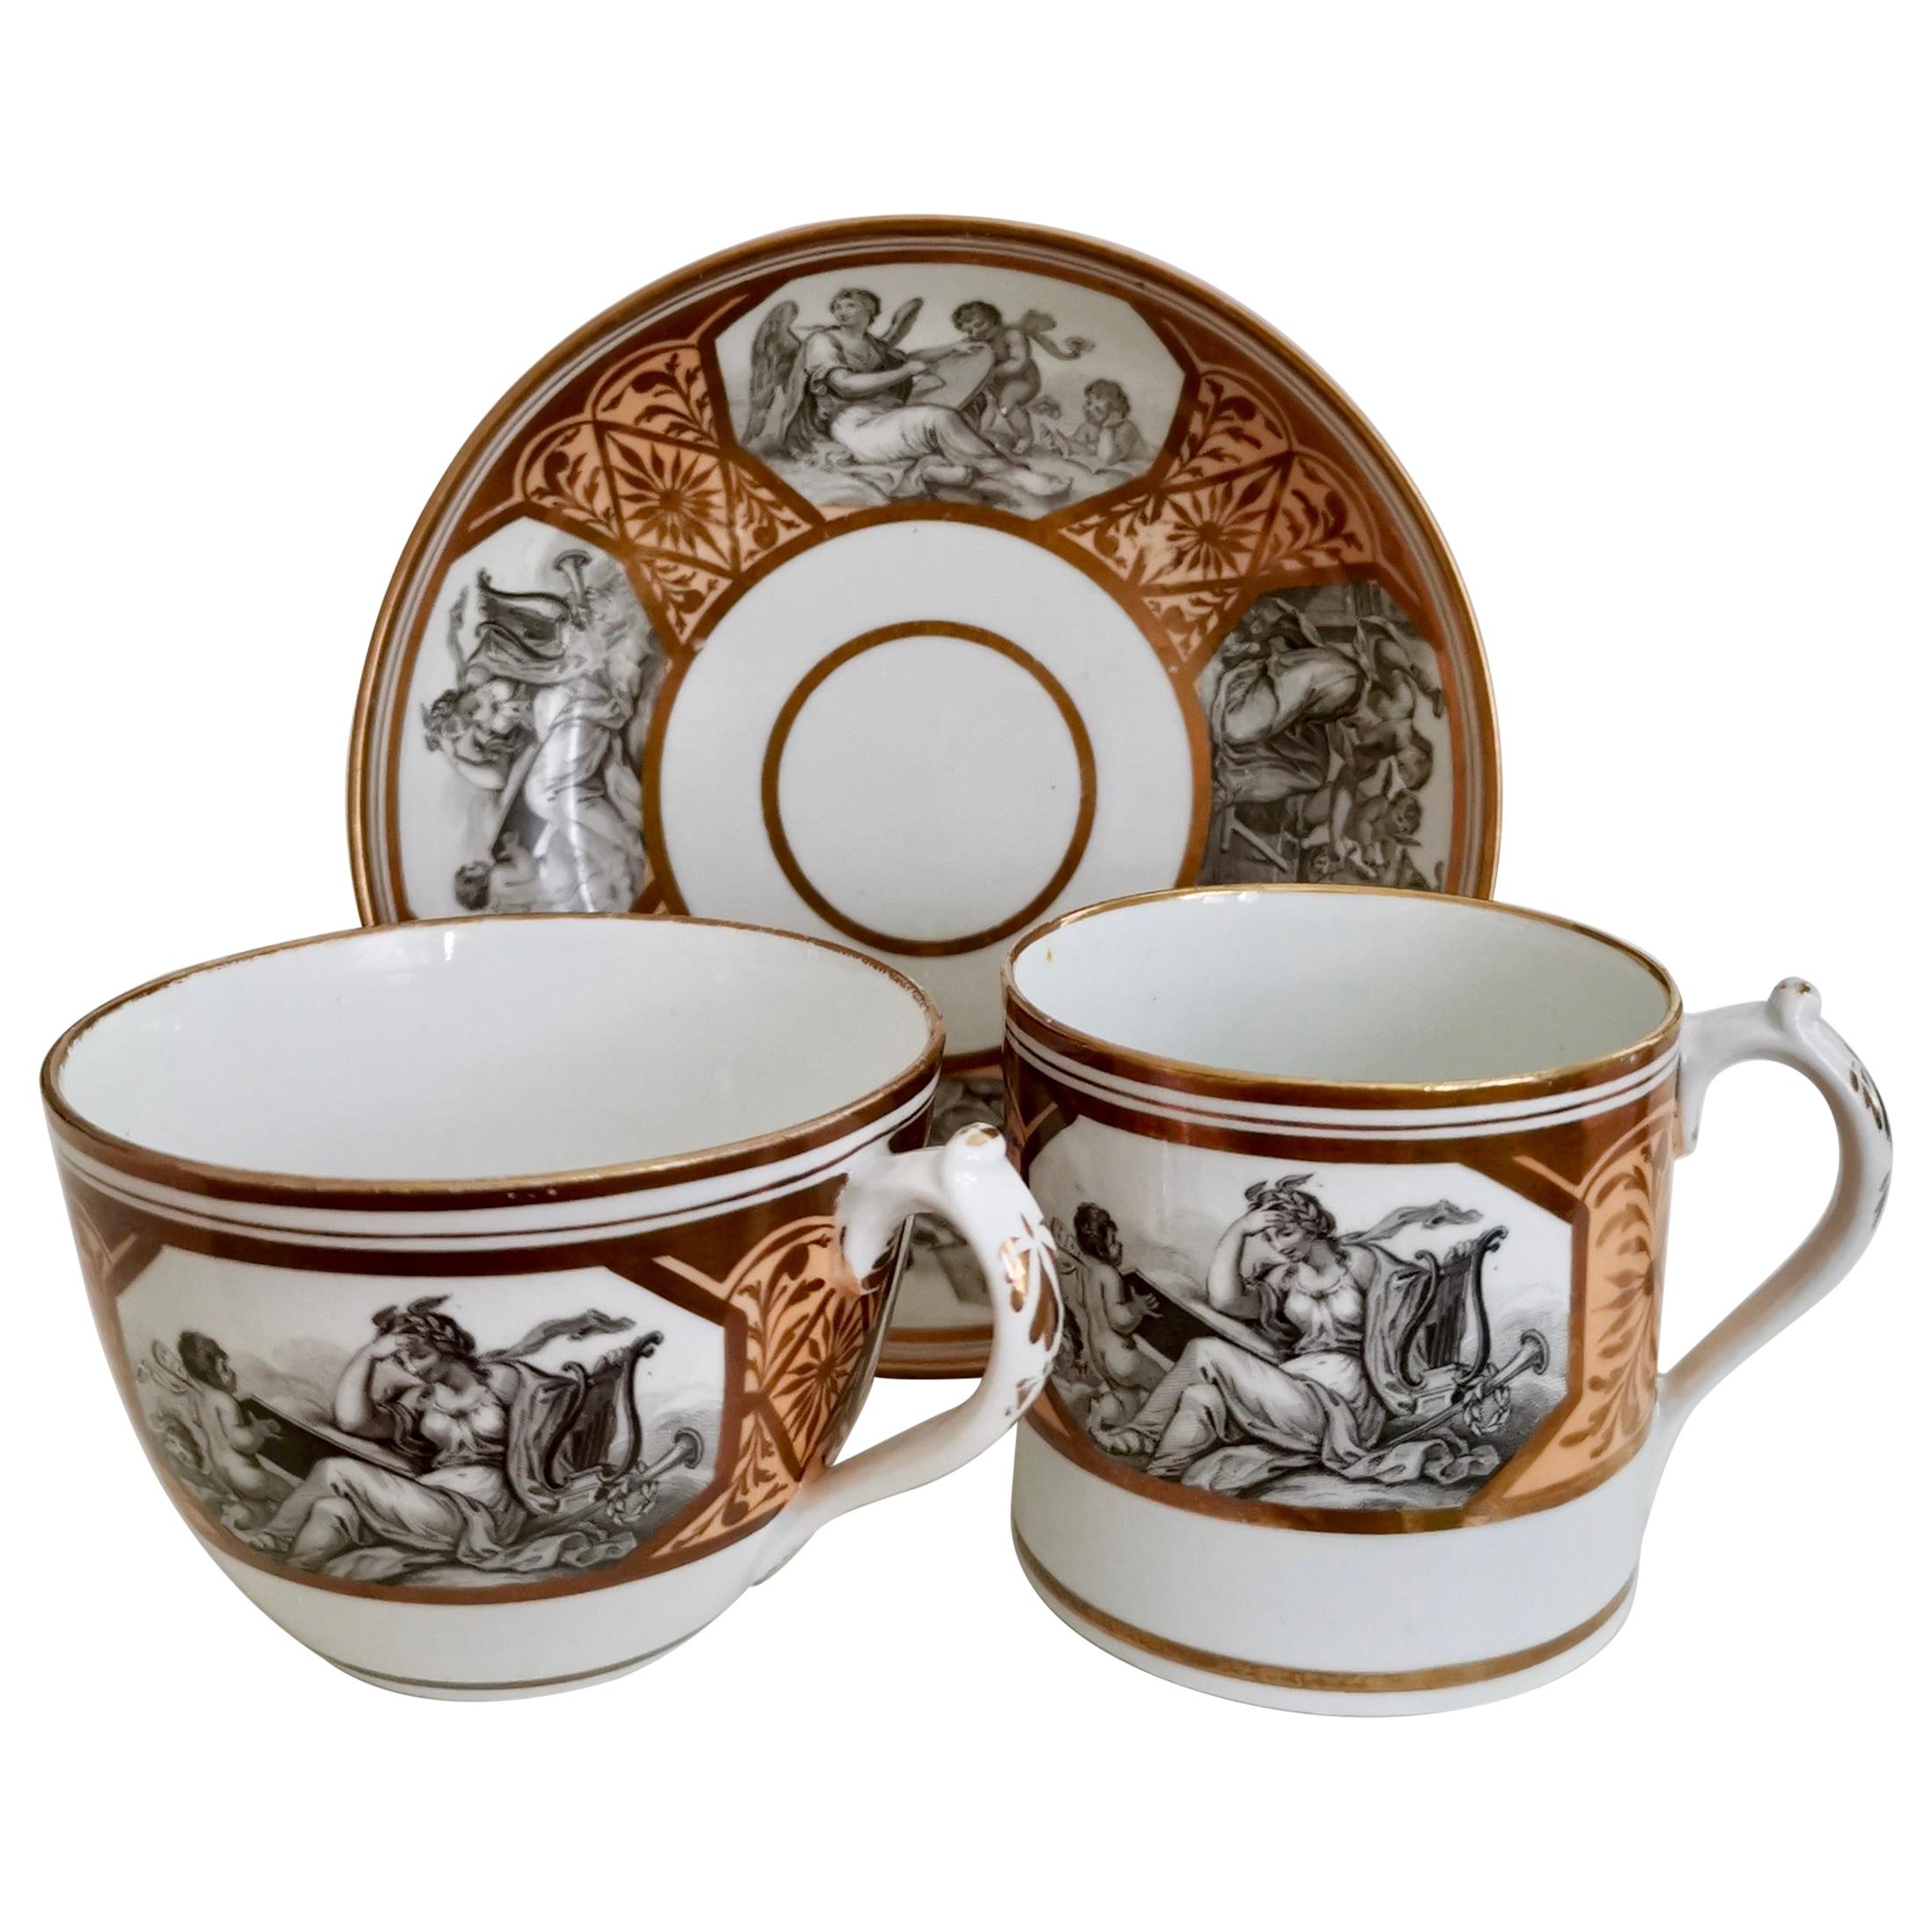 Miles Mason Porcelain Teacup Trio, Minerva and Cherubs, Bronze, Regency ca 1810